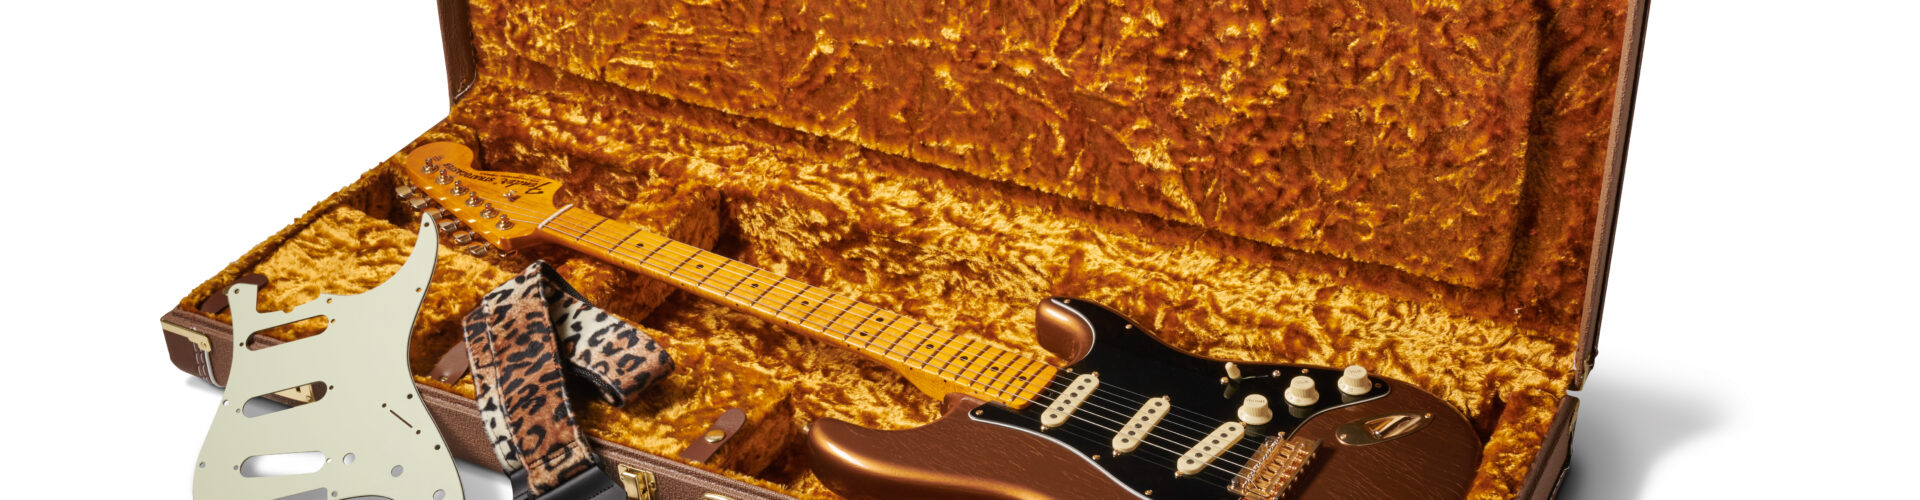 Fender frappe très fort avec la Strat Bruno Mars signature